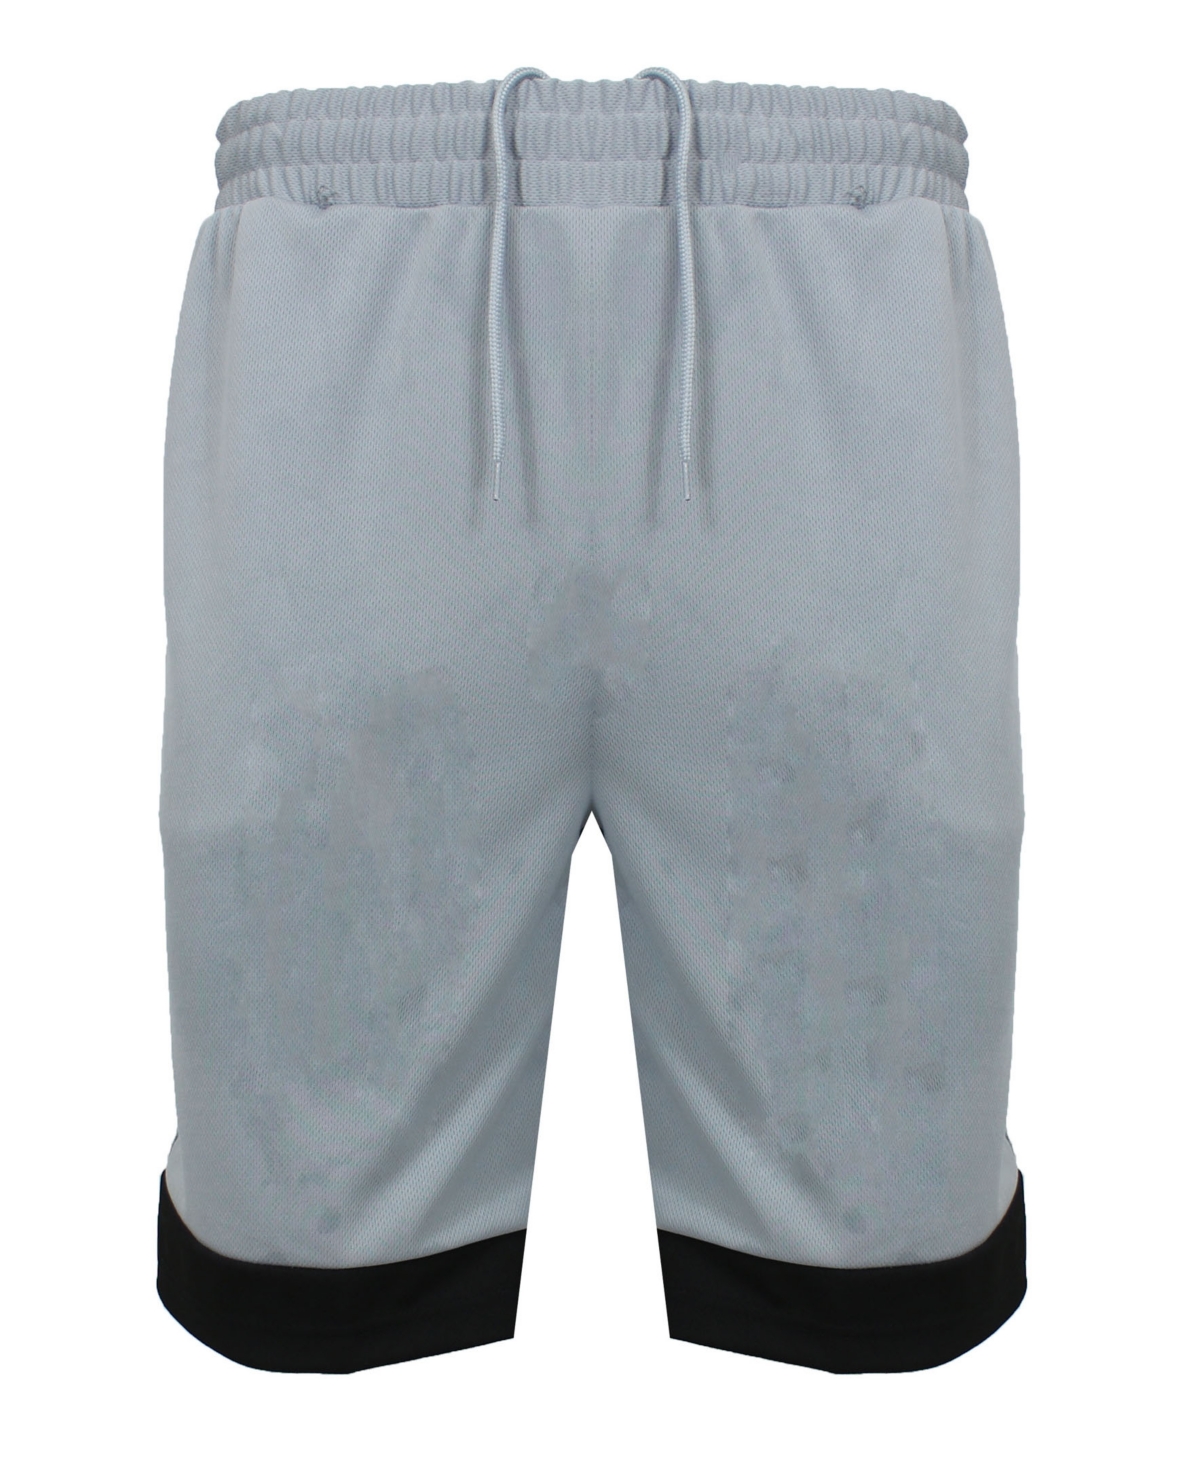 Men's Premium Active Moisture Wicking Workout Mesh Shorts With Trim - Silver/Black